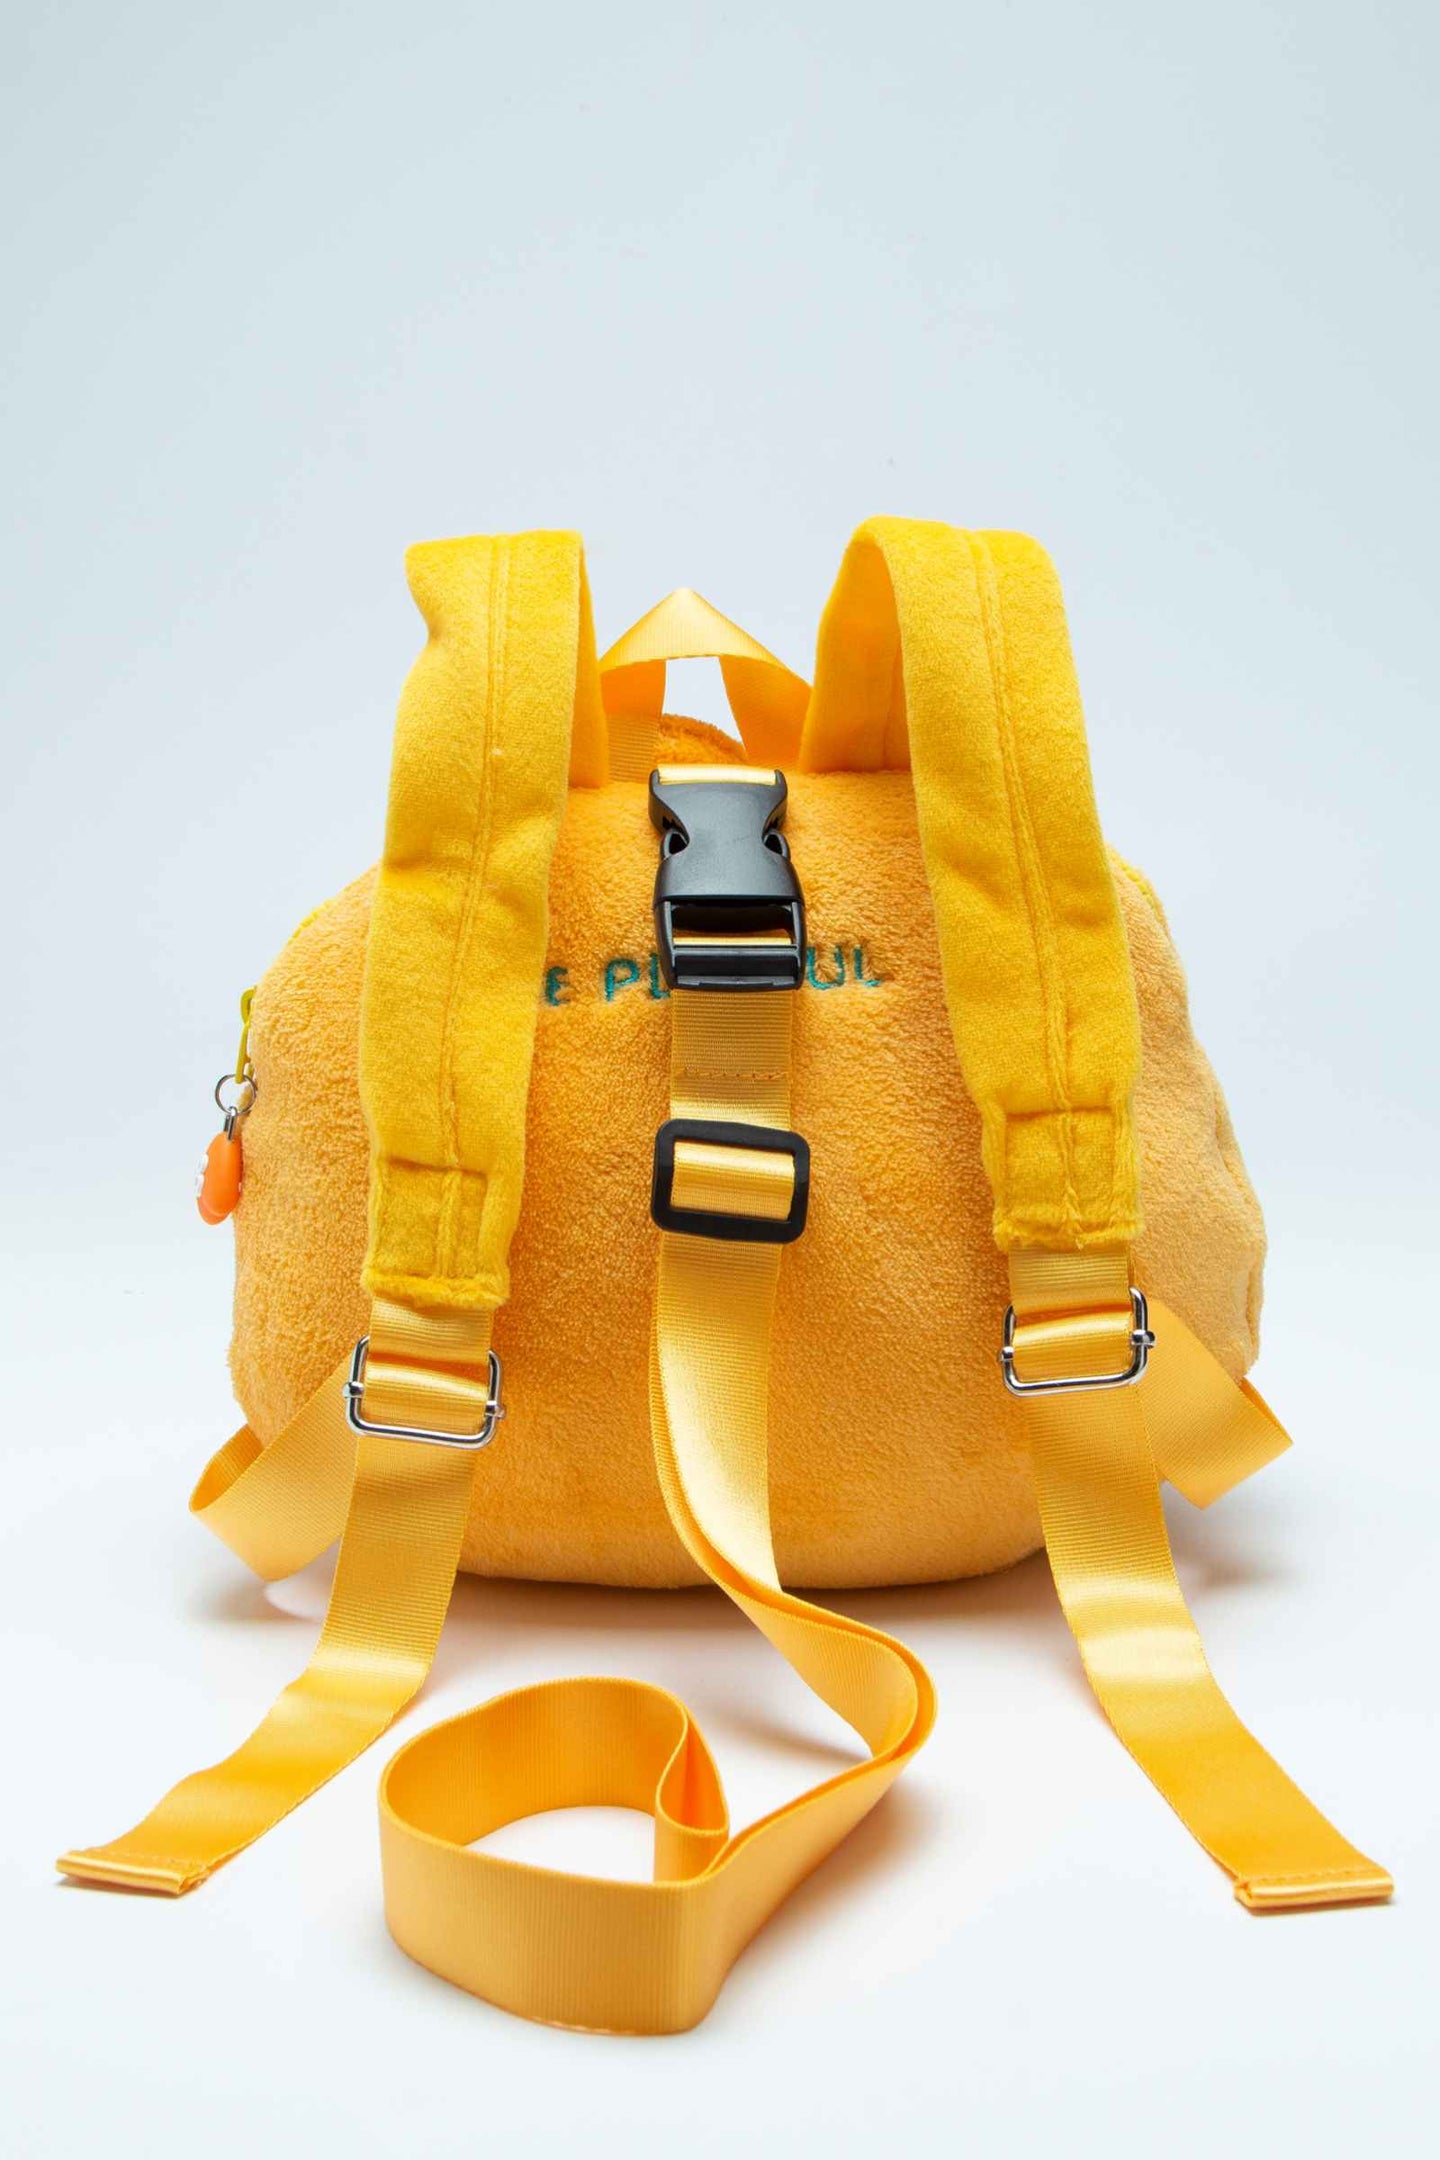 B.Duck Mini Yellow 3D Duckbill Backpack Doll Toy Cute